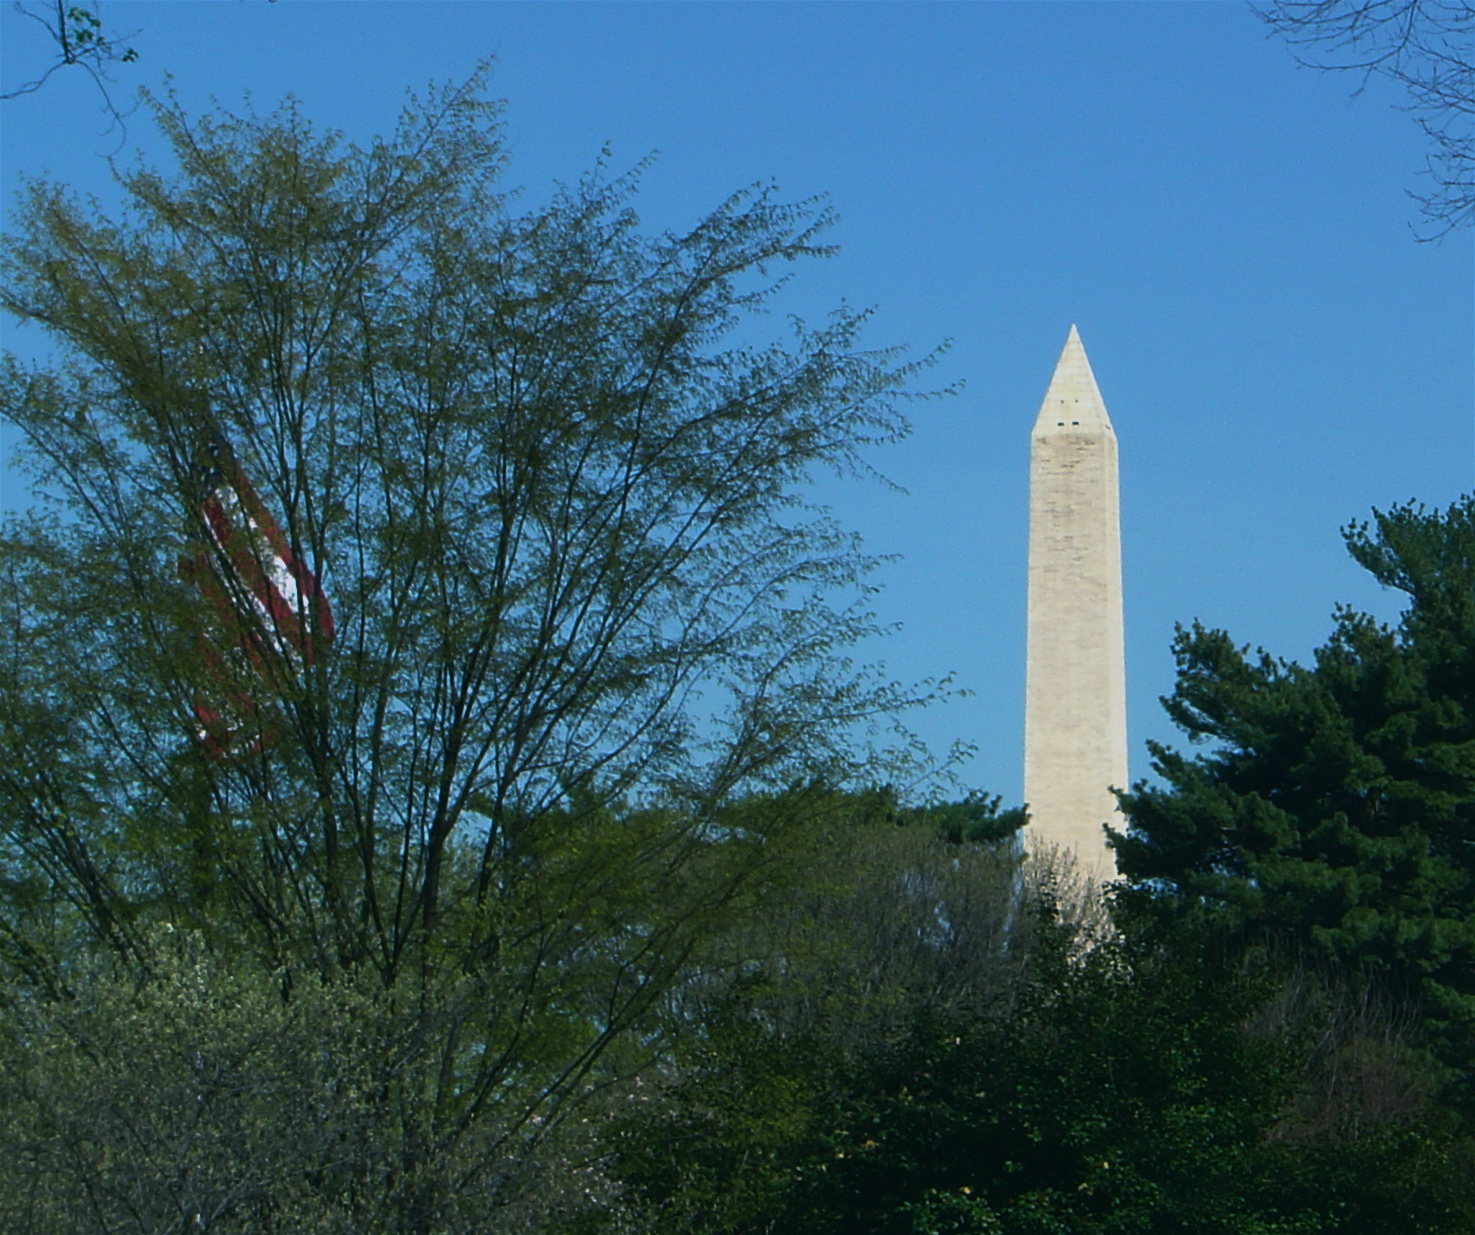 Washington Monument and trees